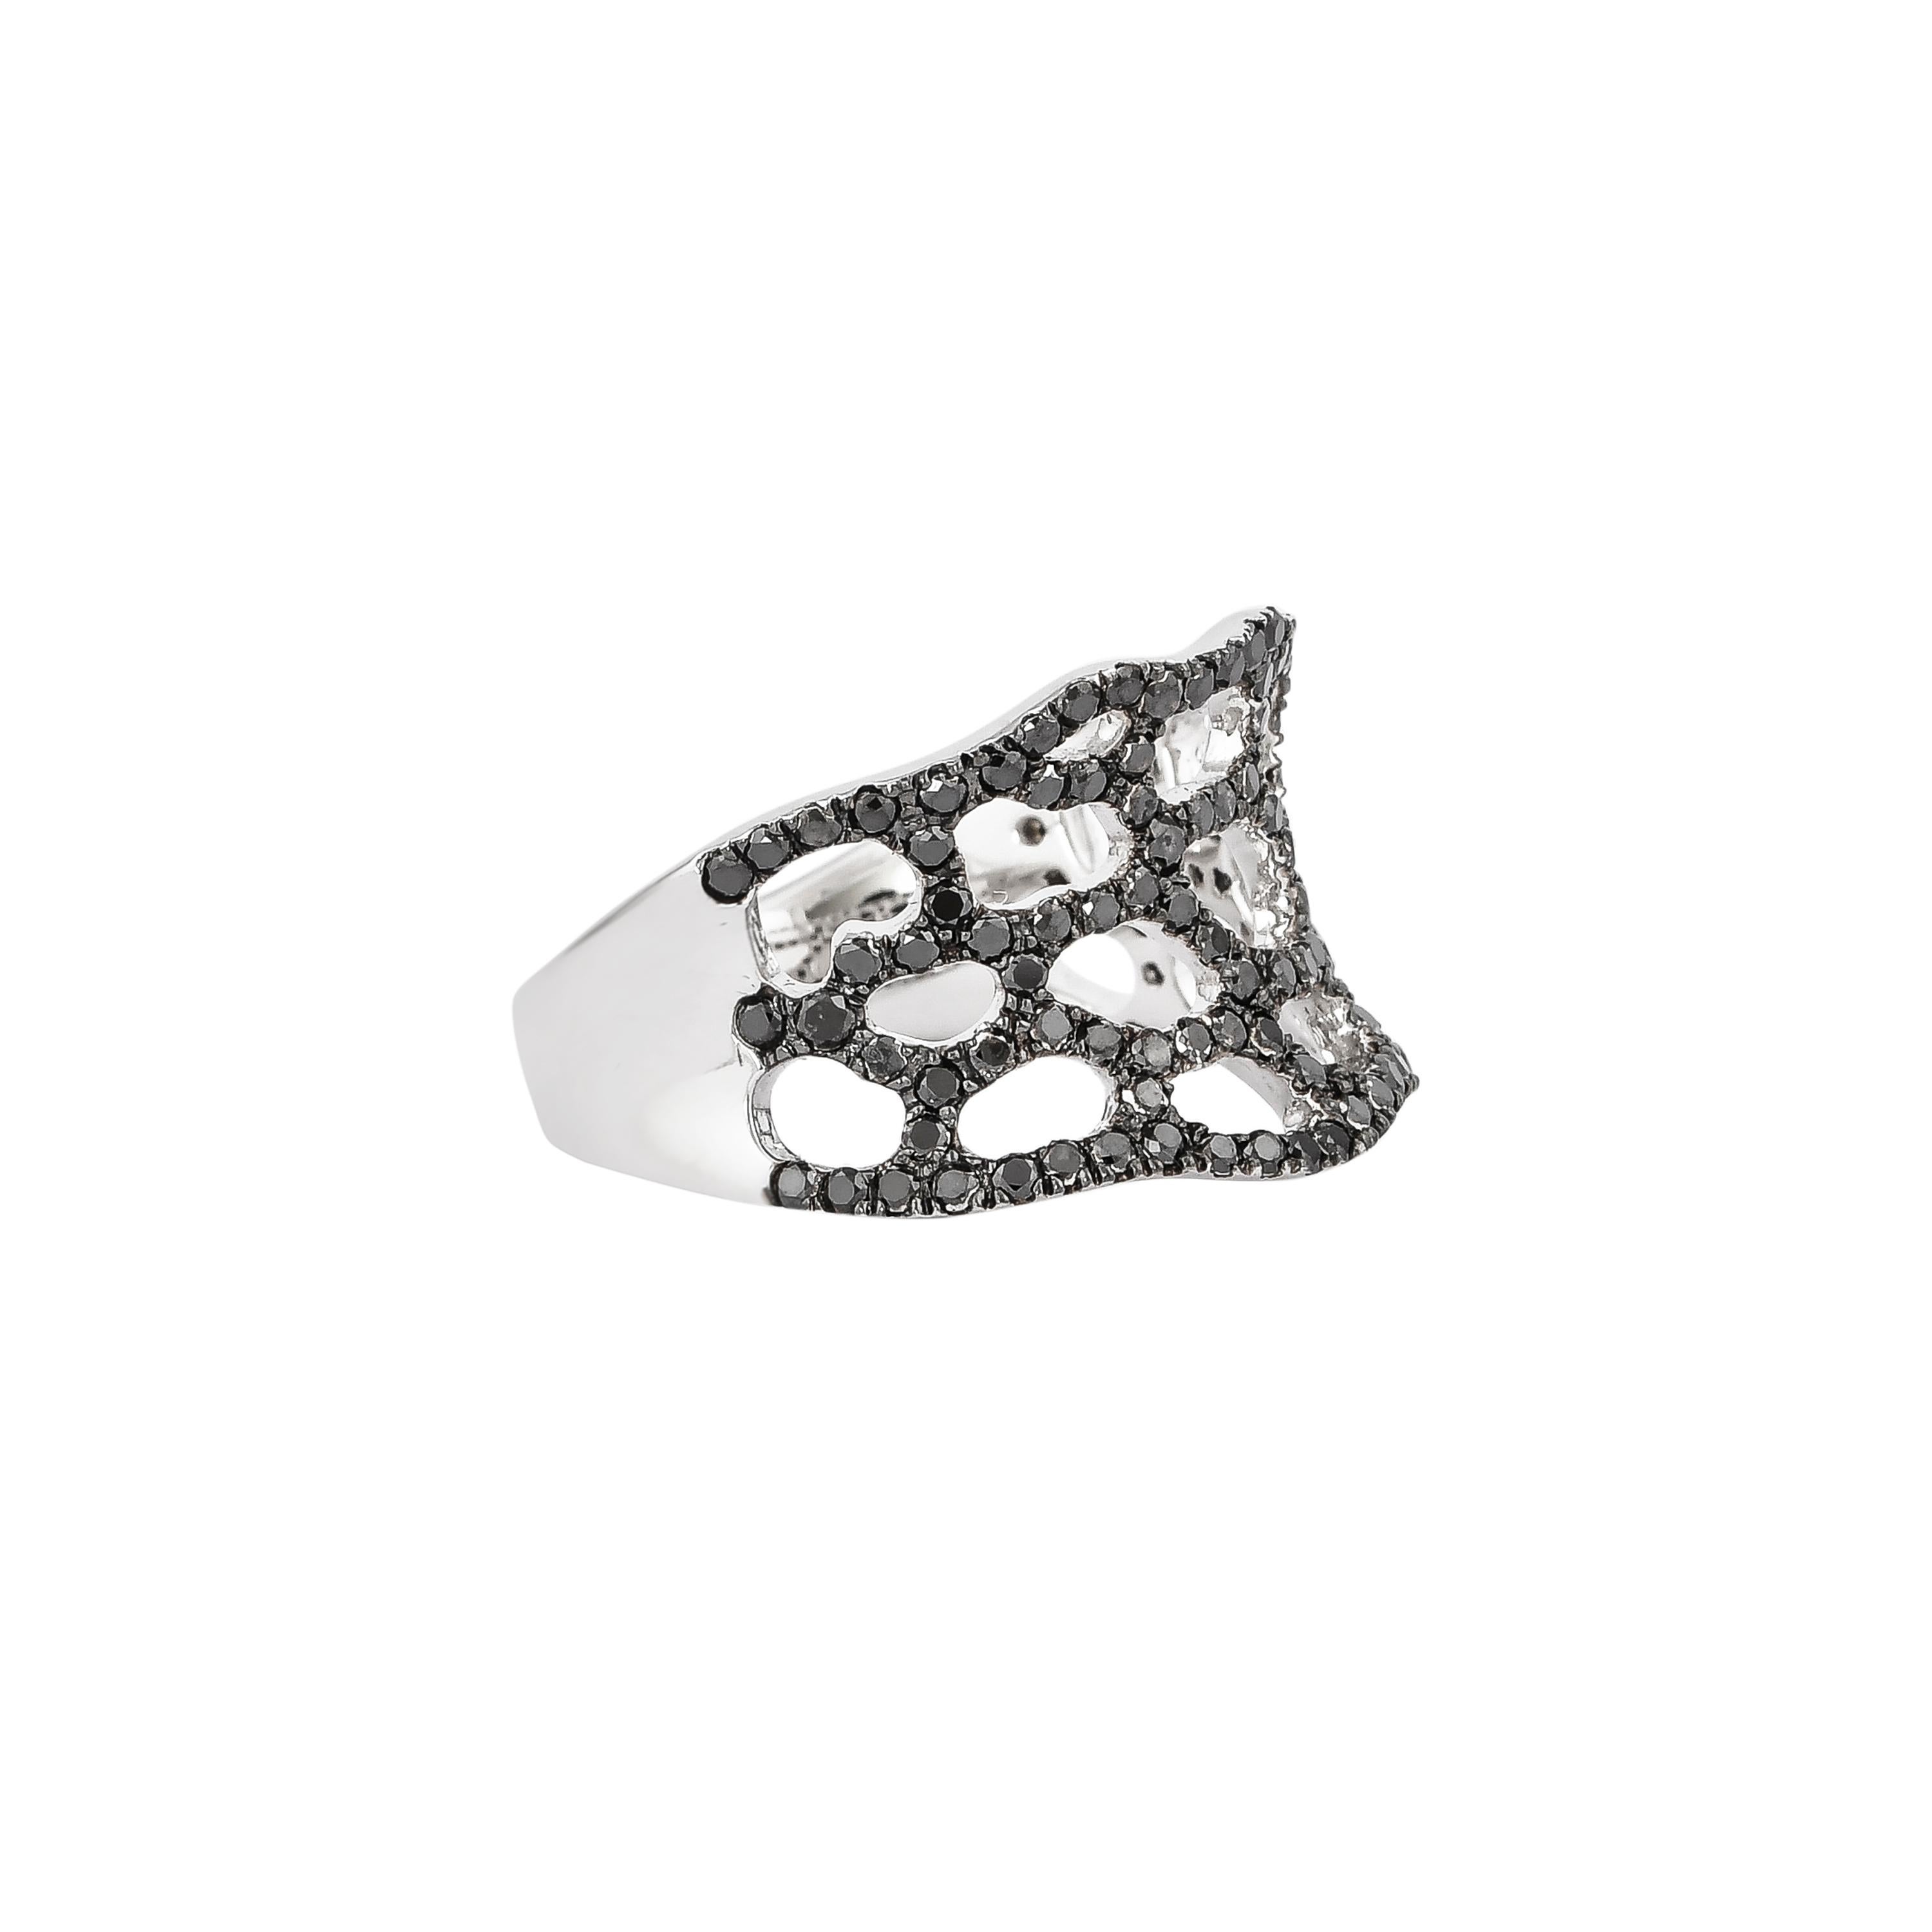 Contemporary 0.8 Carat Black Diamond Ring in 14 Karat White Gold